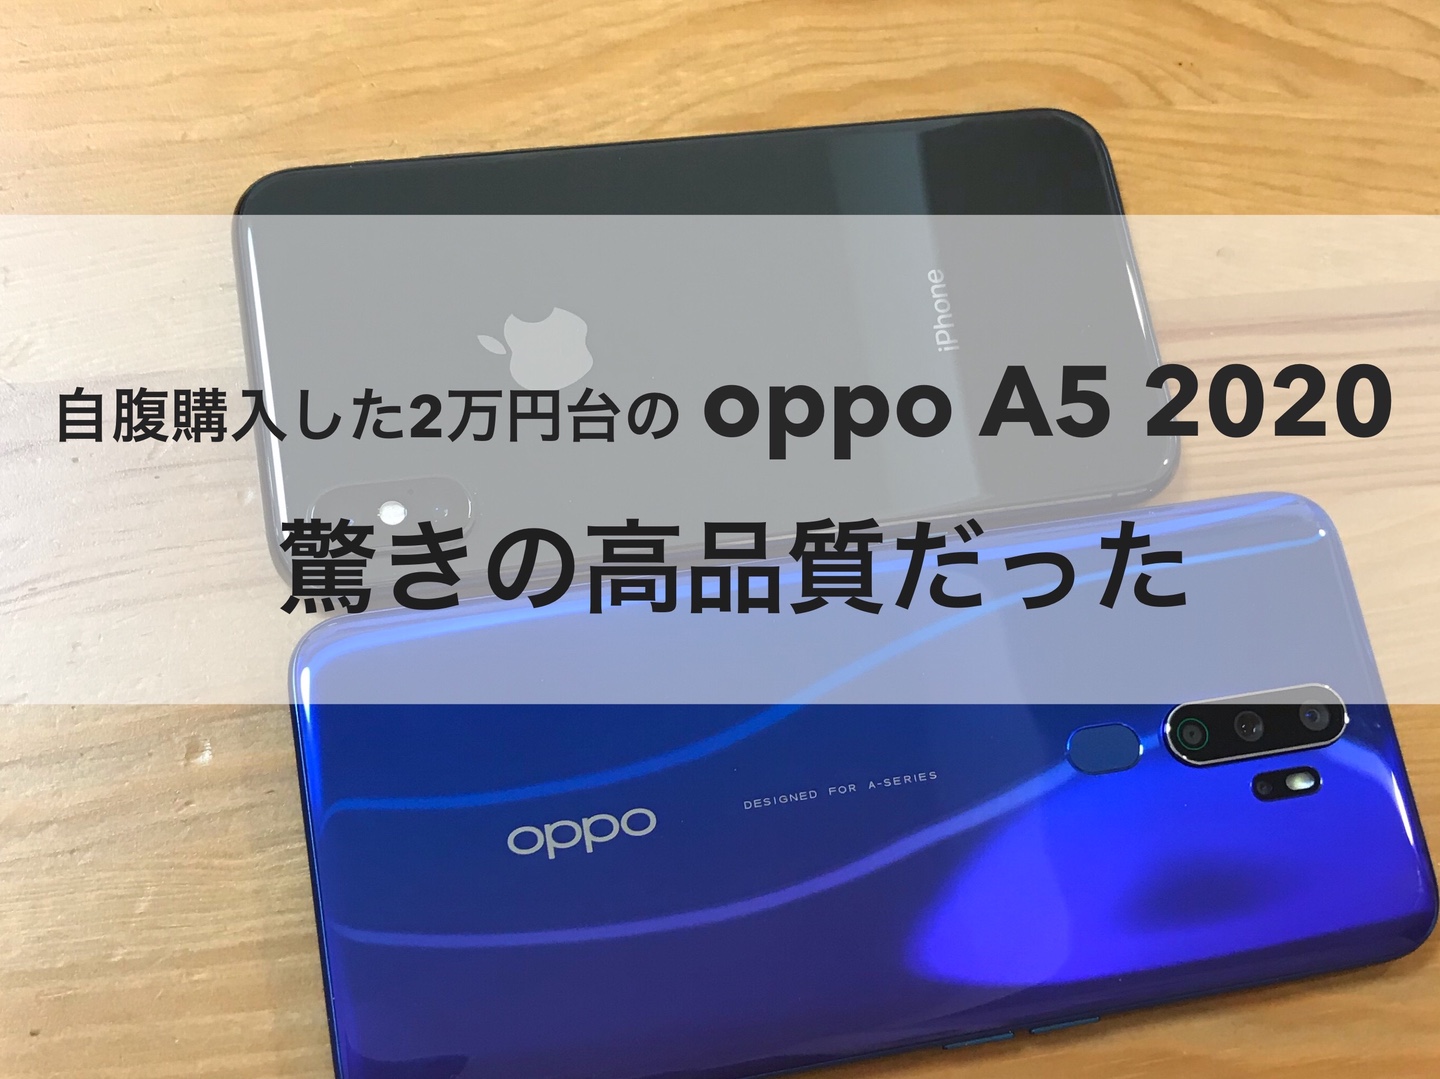 Oppo A5 2020 Iphone Xと外観比較 3万円弱の A5の方がずっと良い